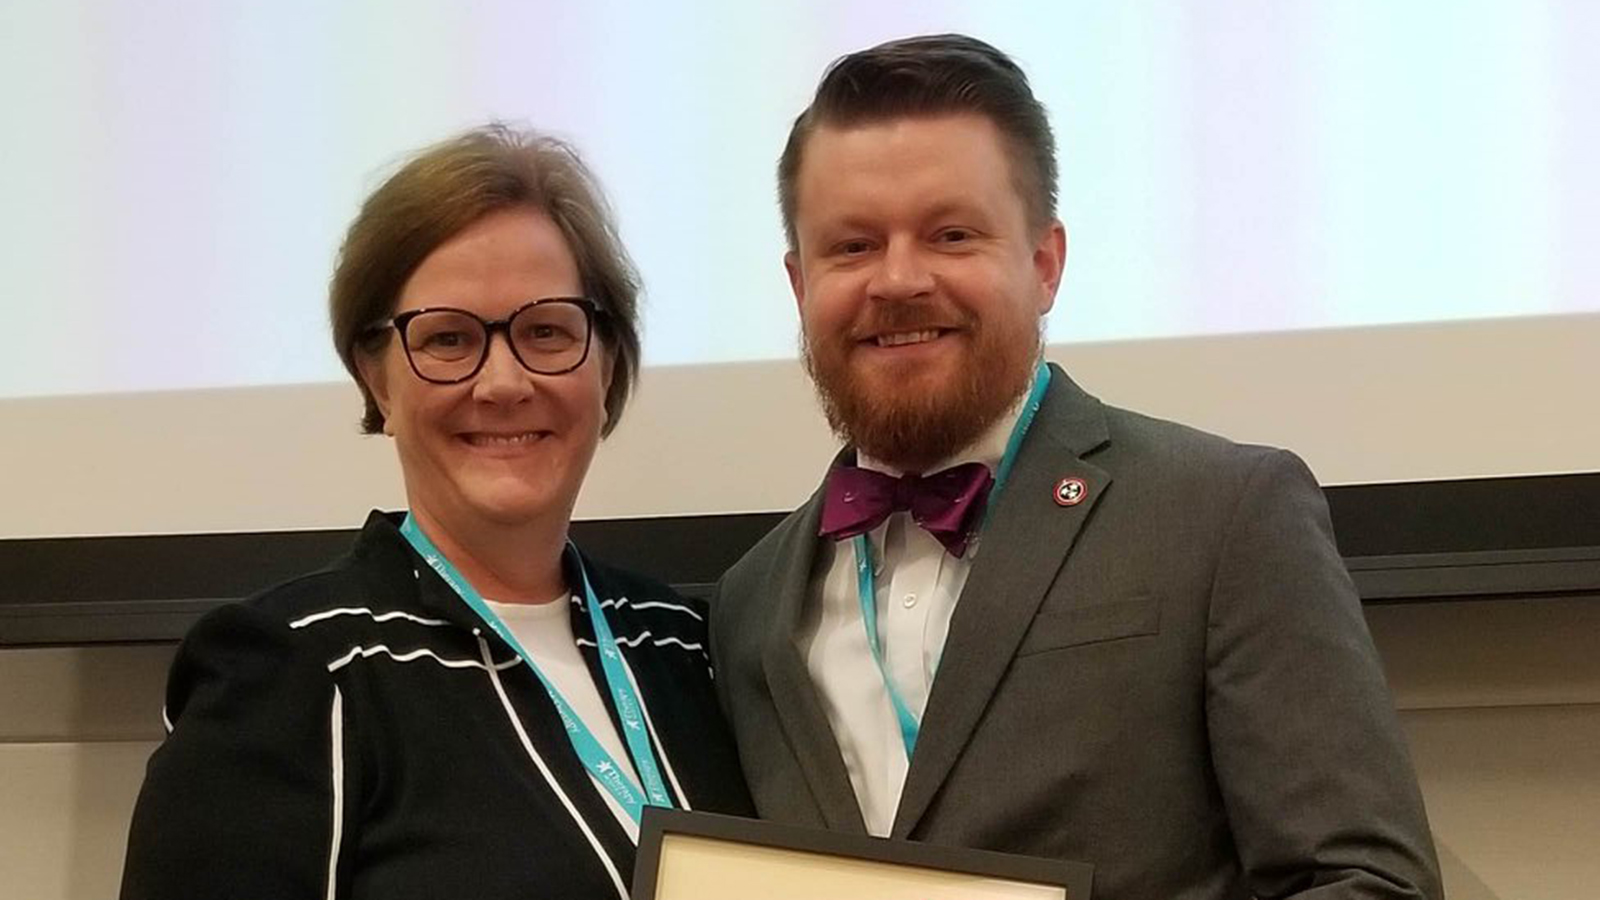 Josh Sevier receives the Nebraska State Clinical Achievement Award from Sherri Jones, current president of the Nebraska Speech-Language-Hearing Association.